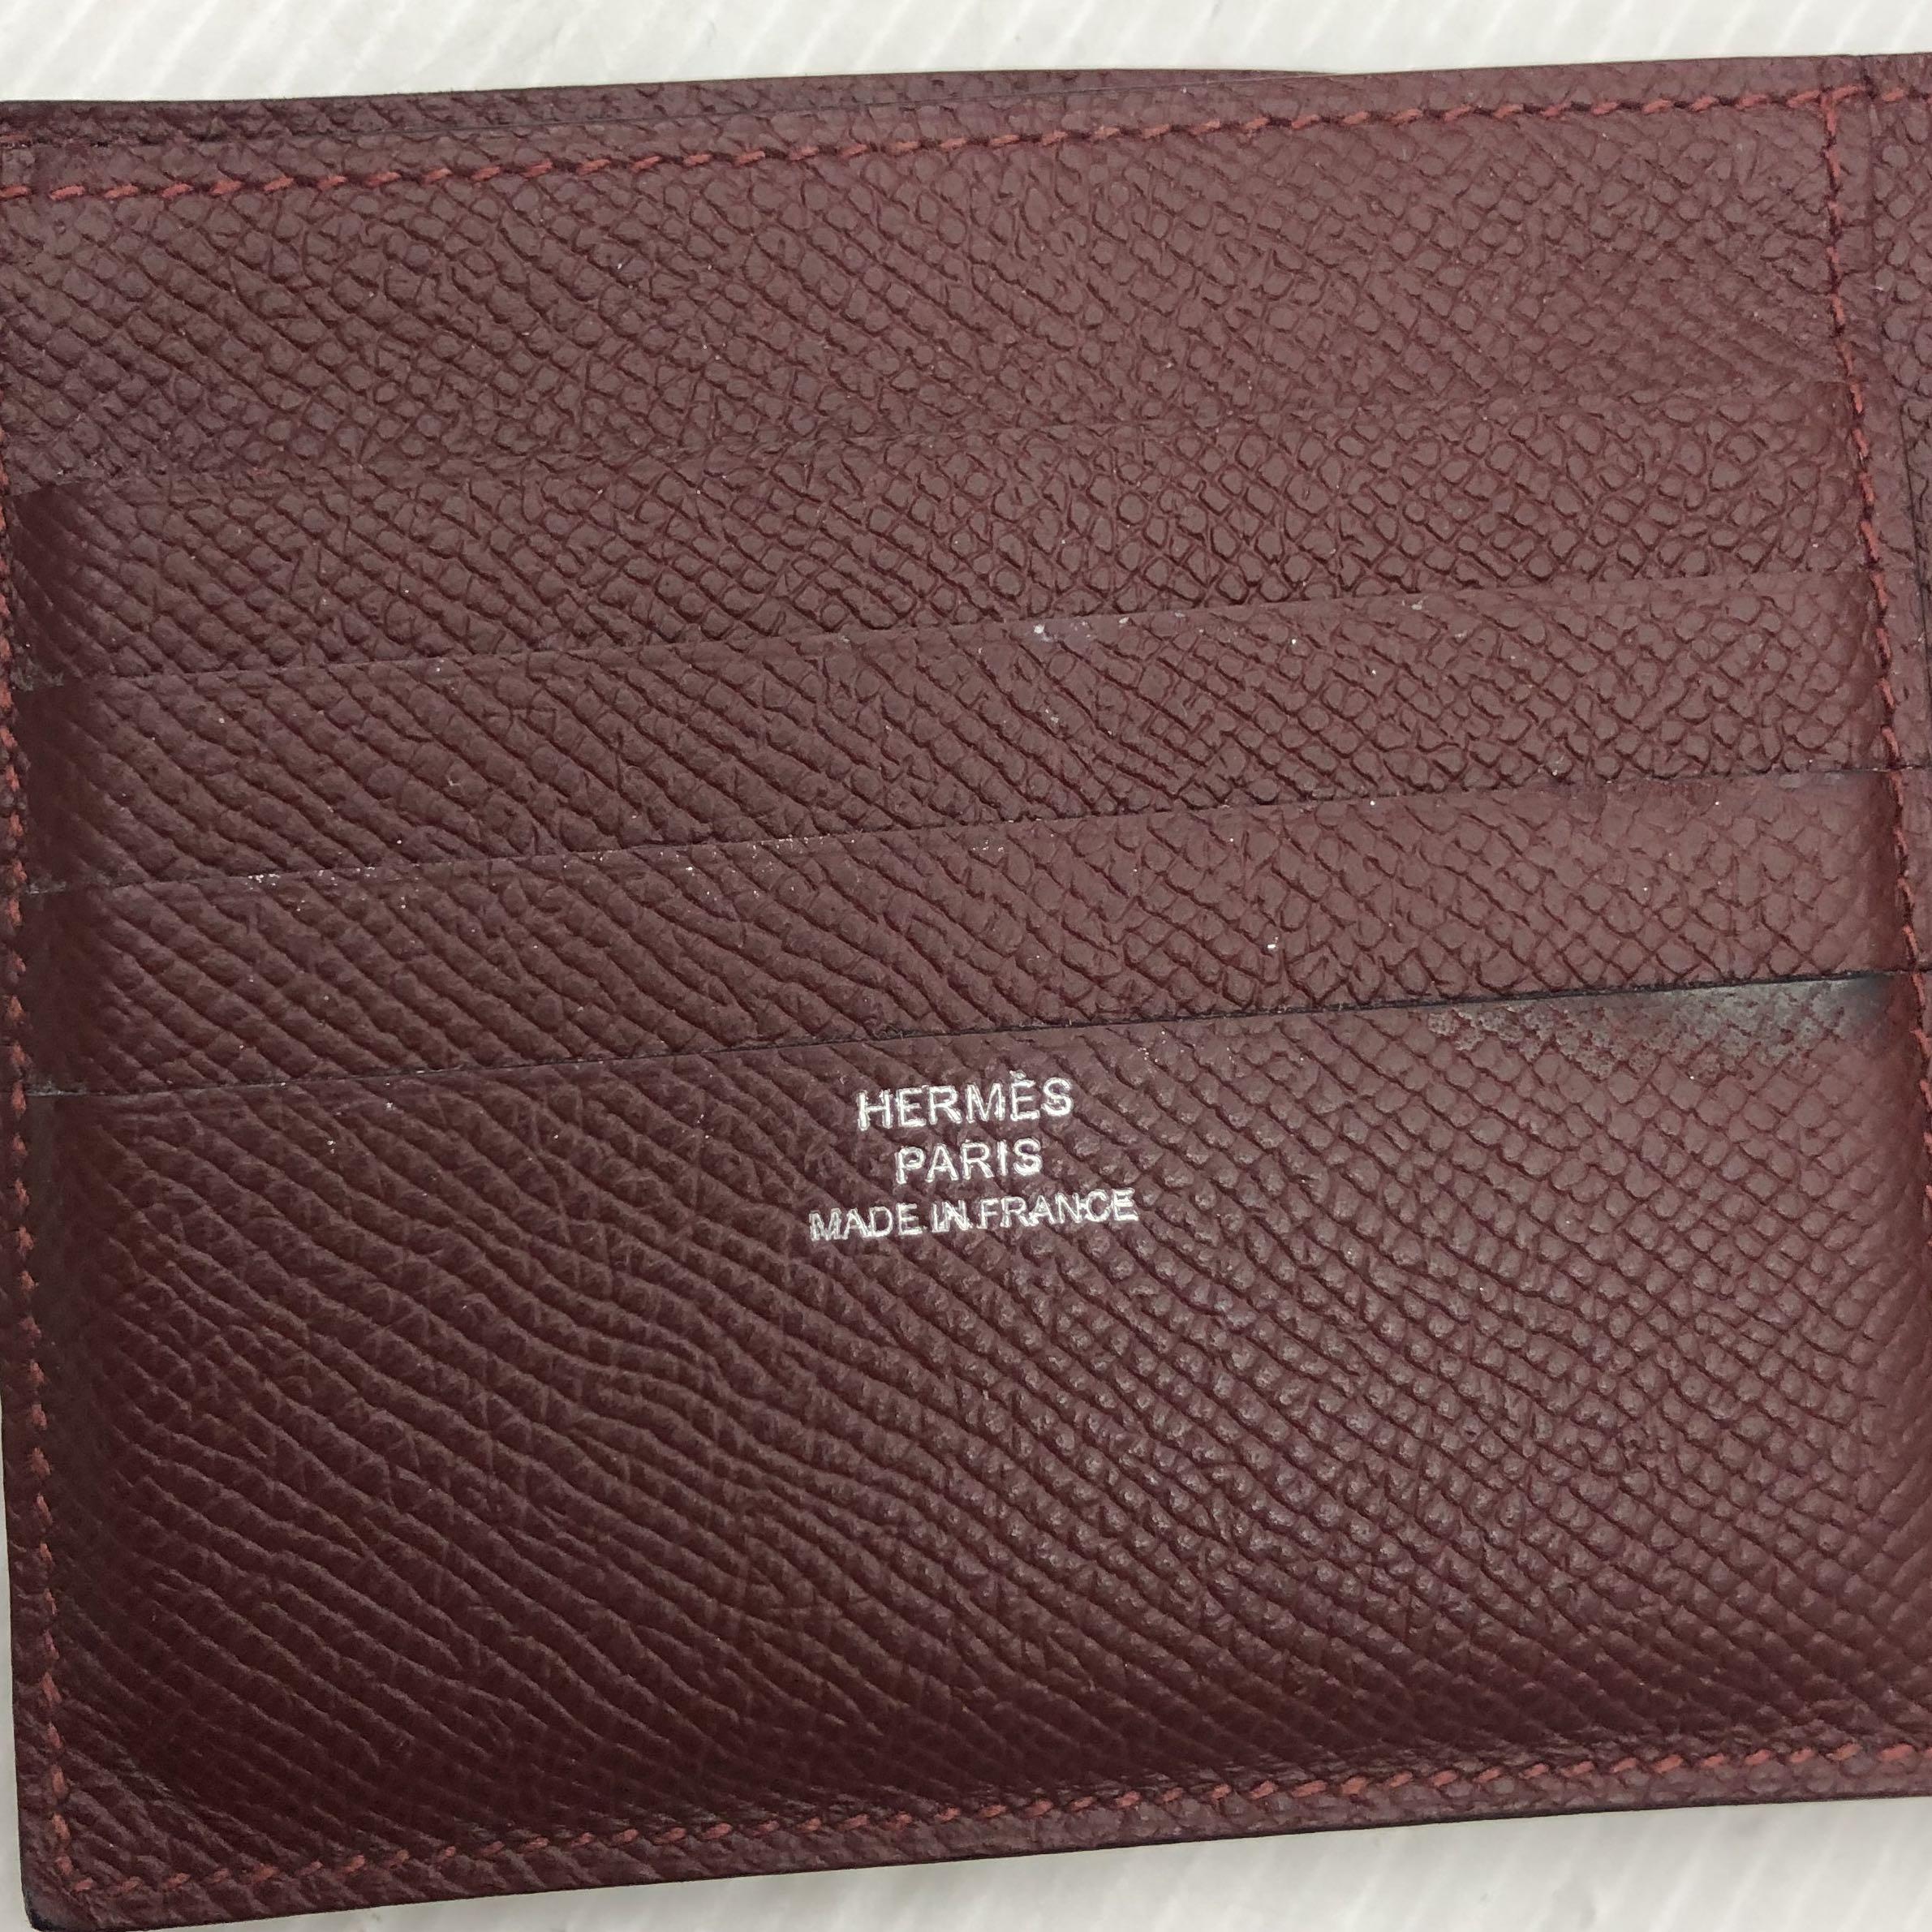 Shop HERMES Unisex Street Style Folding Wallet Card Holders by NobU37